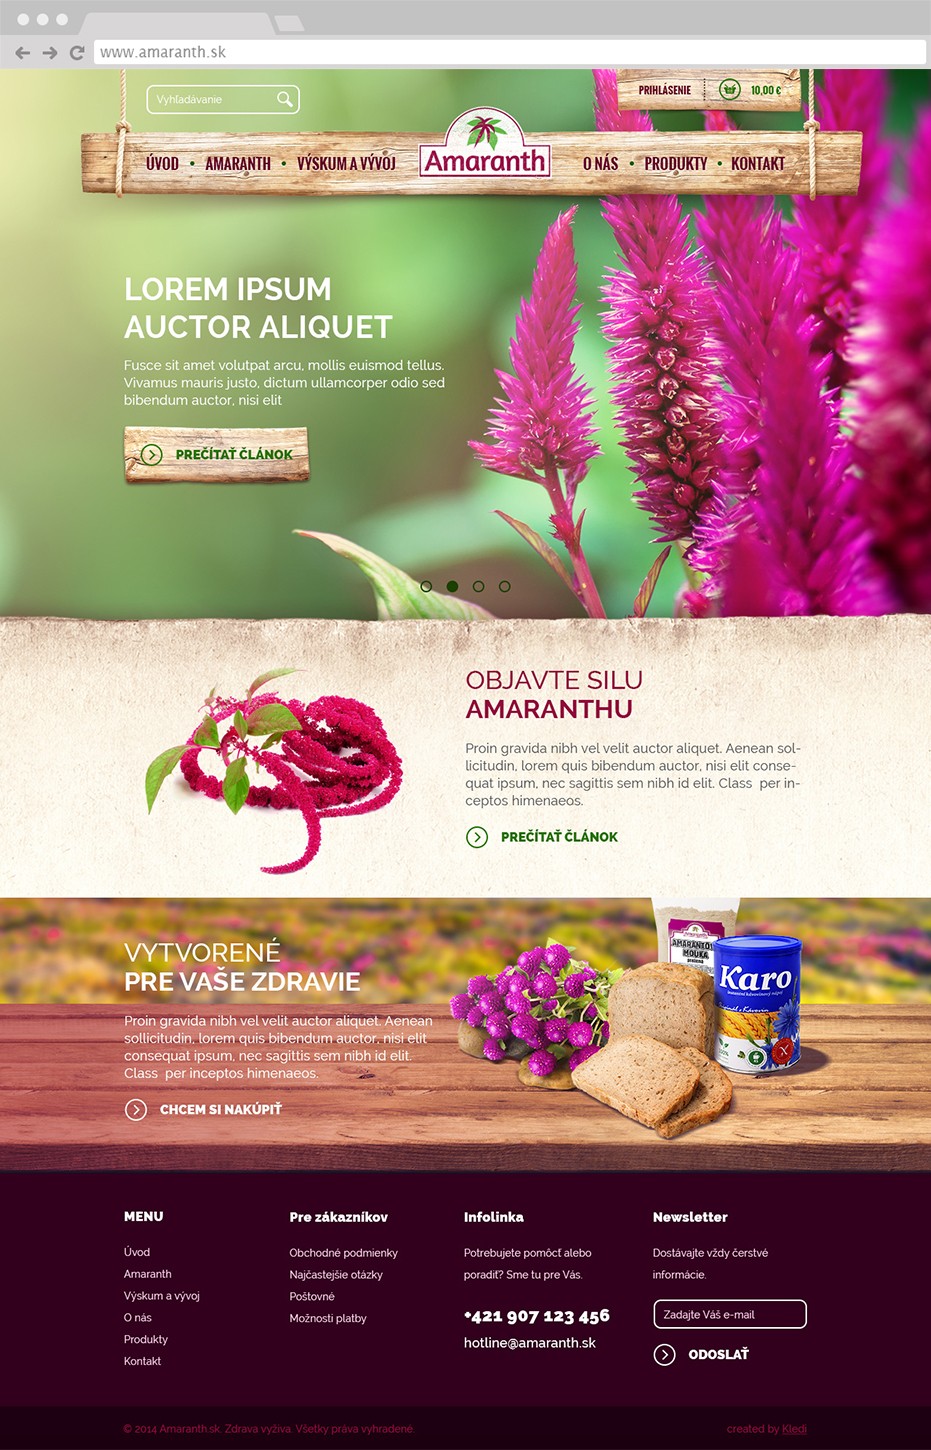 Amaranth website in browser showcase